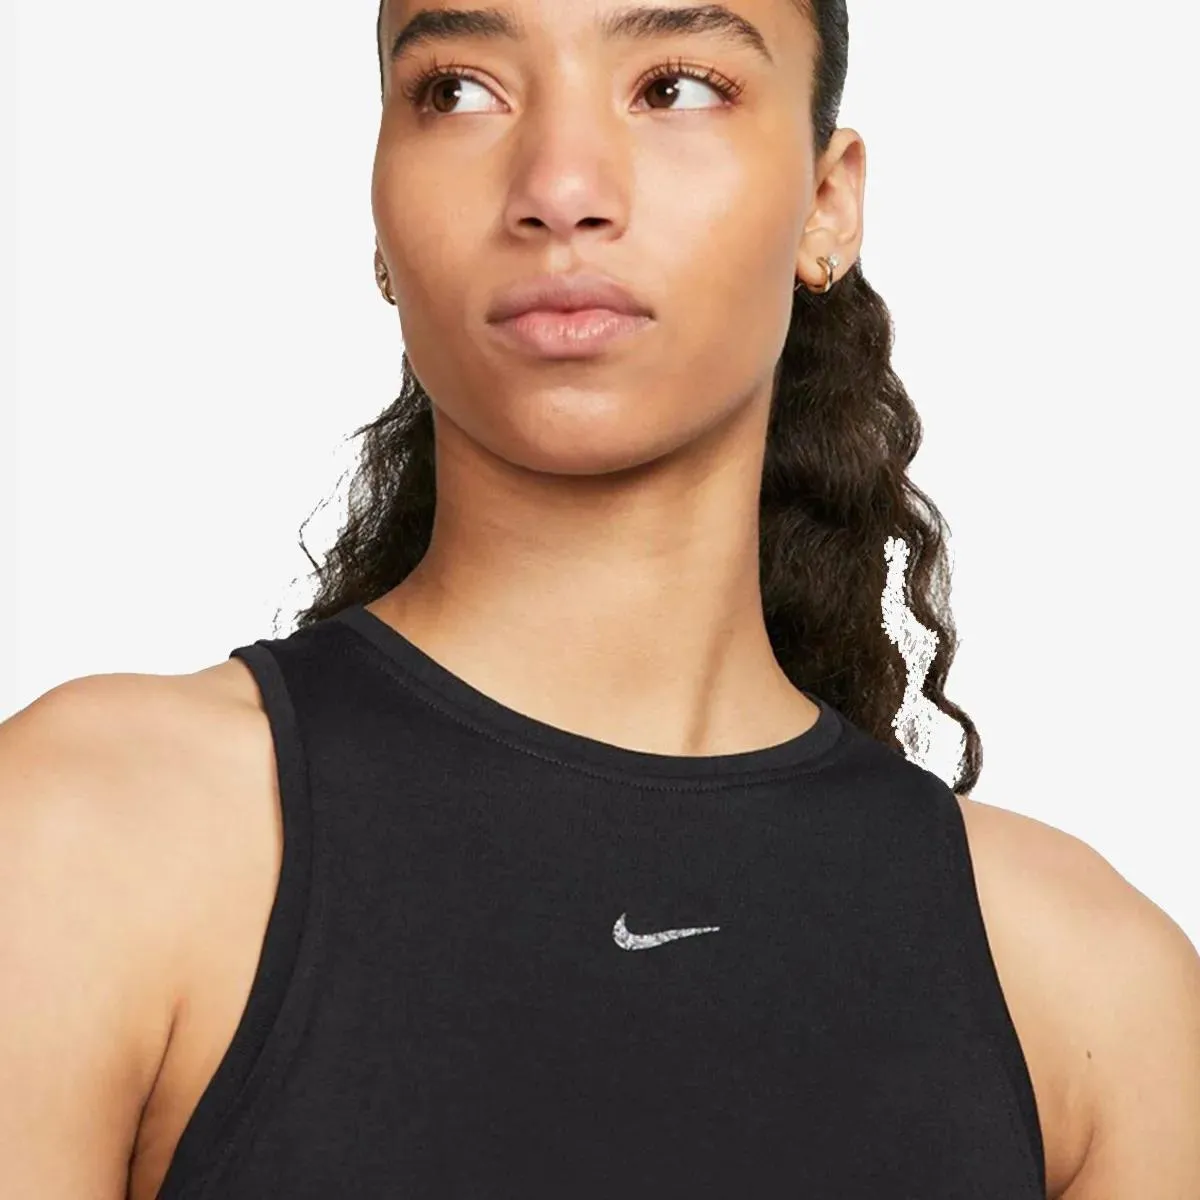 Nike Top i majica bez rukava Dri-FIT 